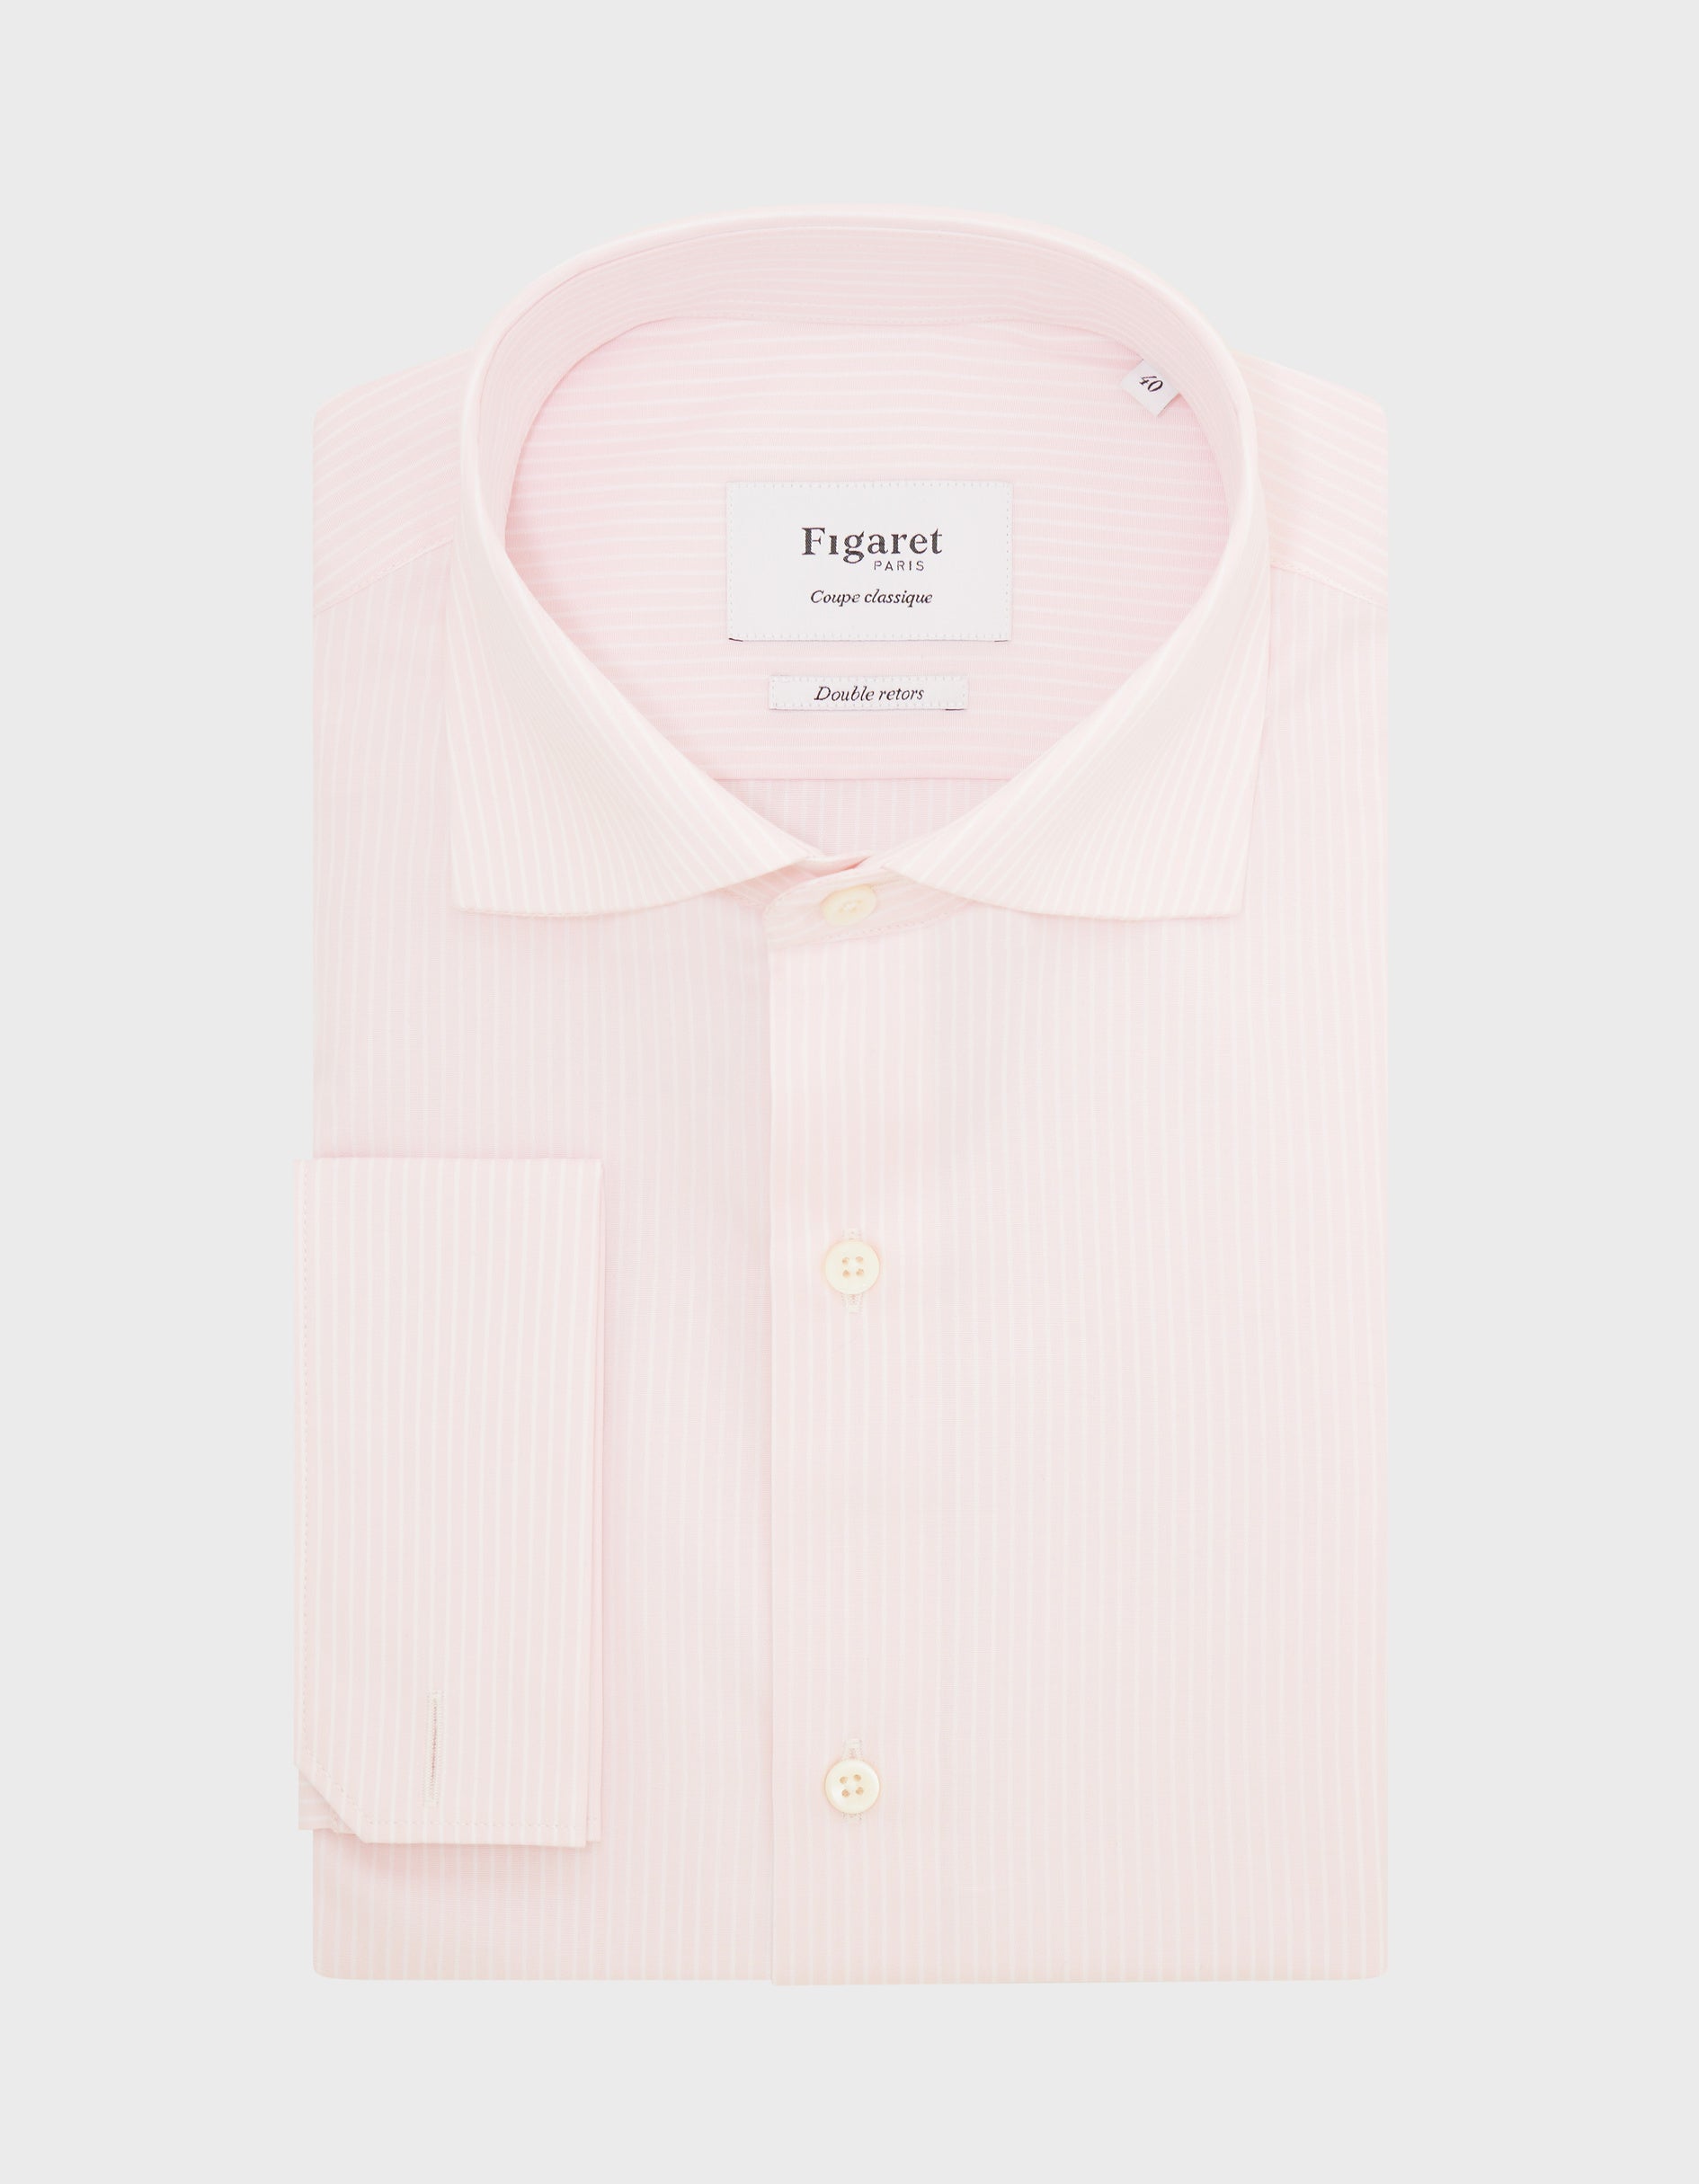 Classic pink striped shirt - Poplin - Italian Collar - French Cuffs